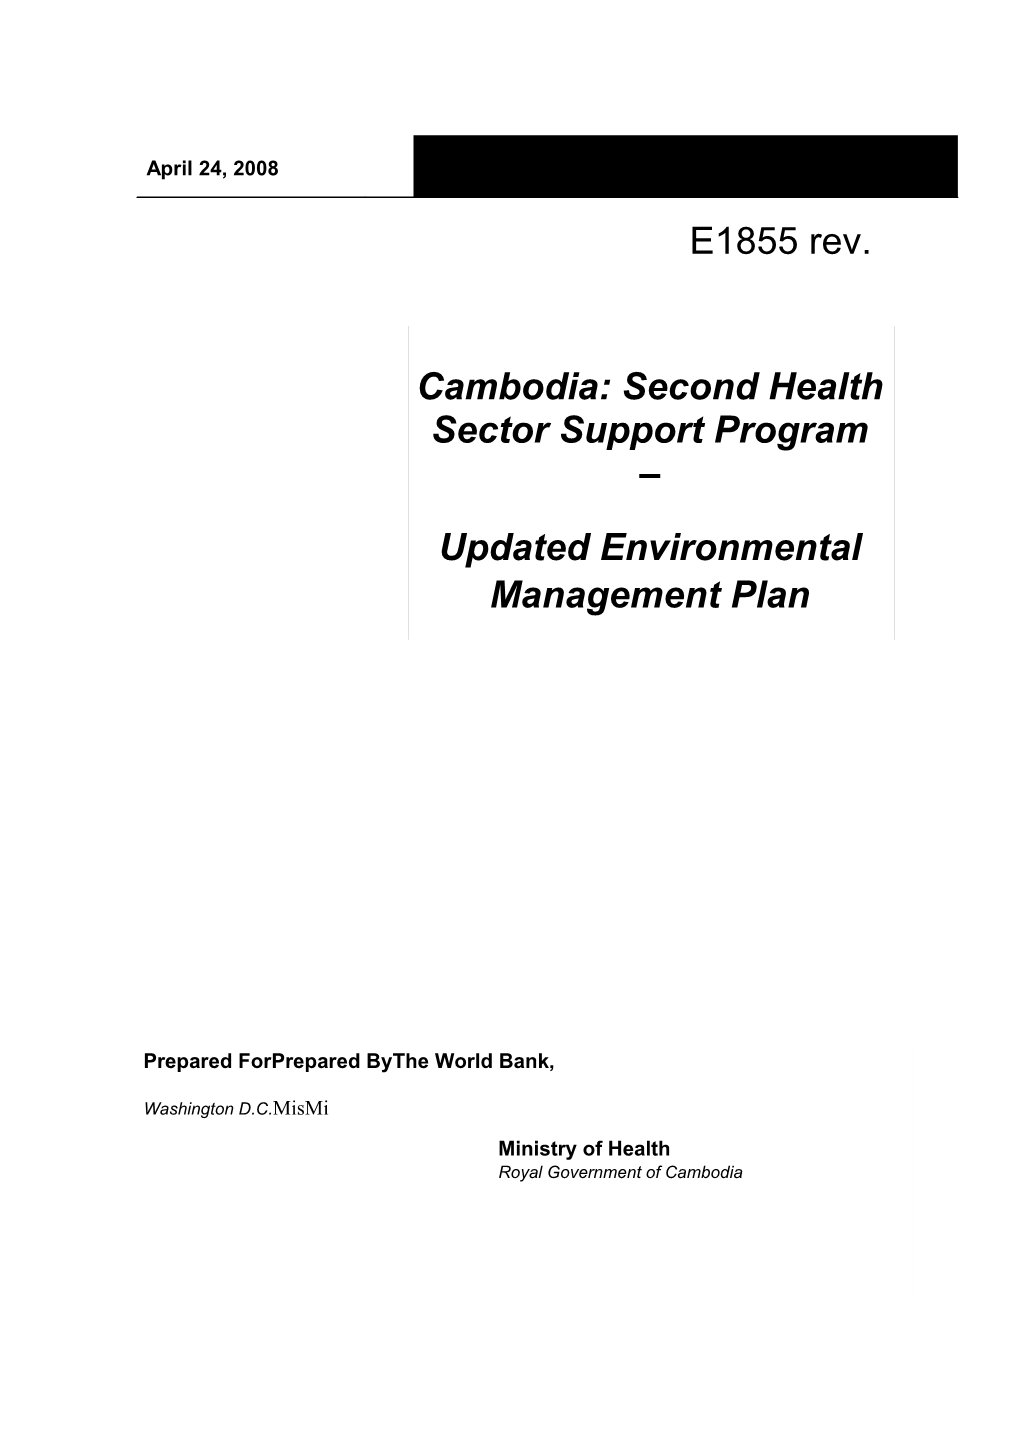 Cambodia: Second Health Sector Support Program